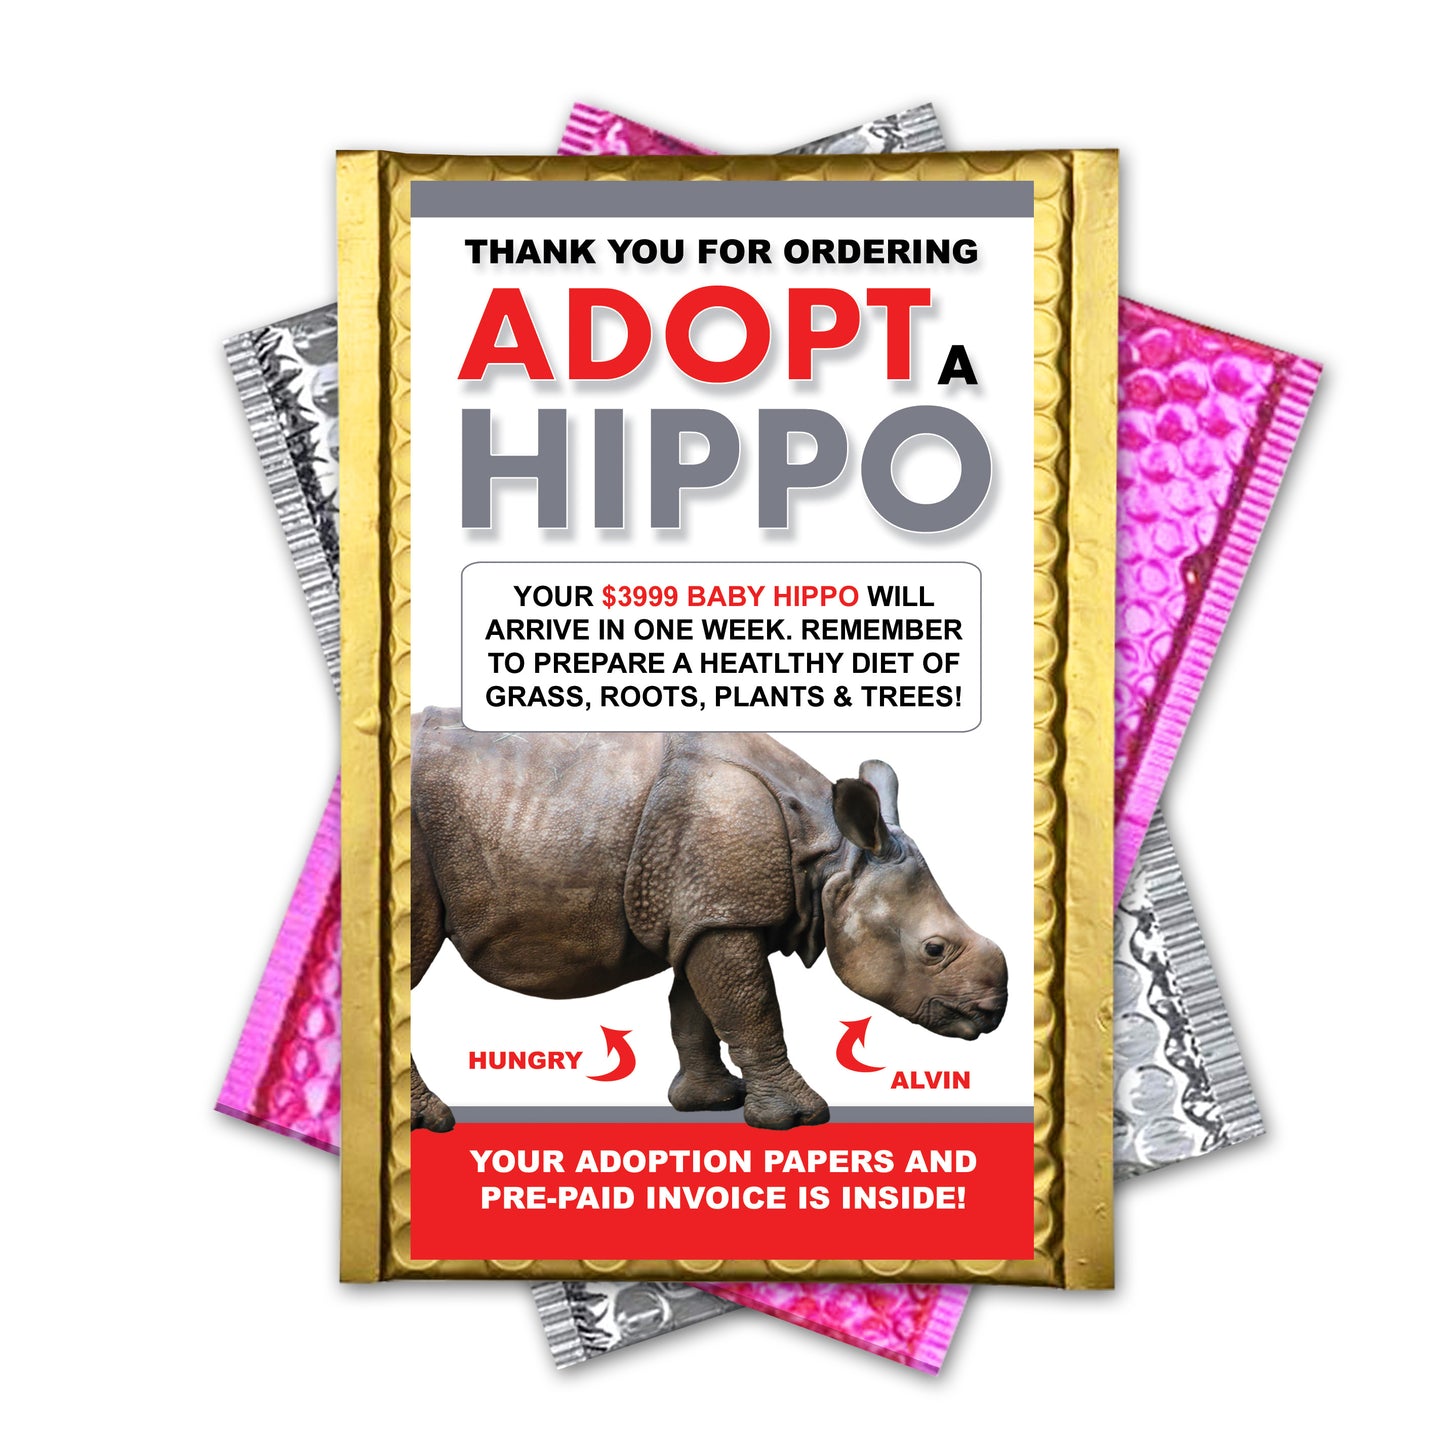 Adopt a Hippo Embarrassing Prank Mail